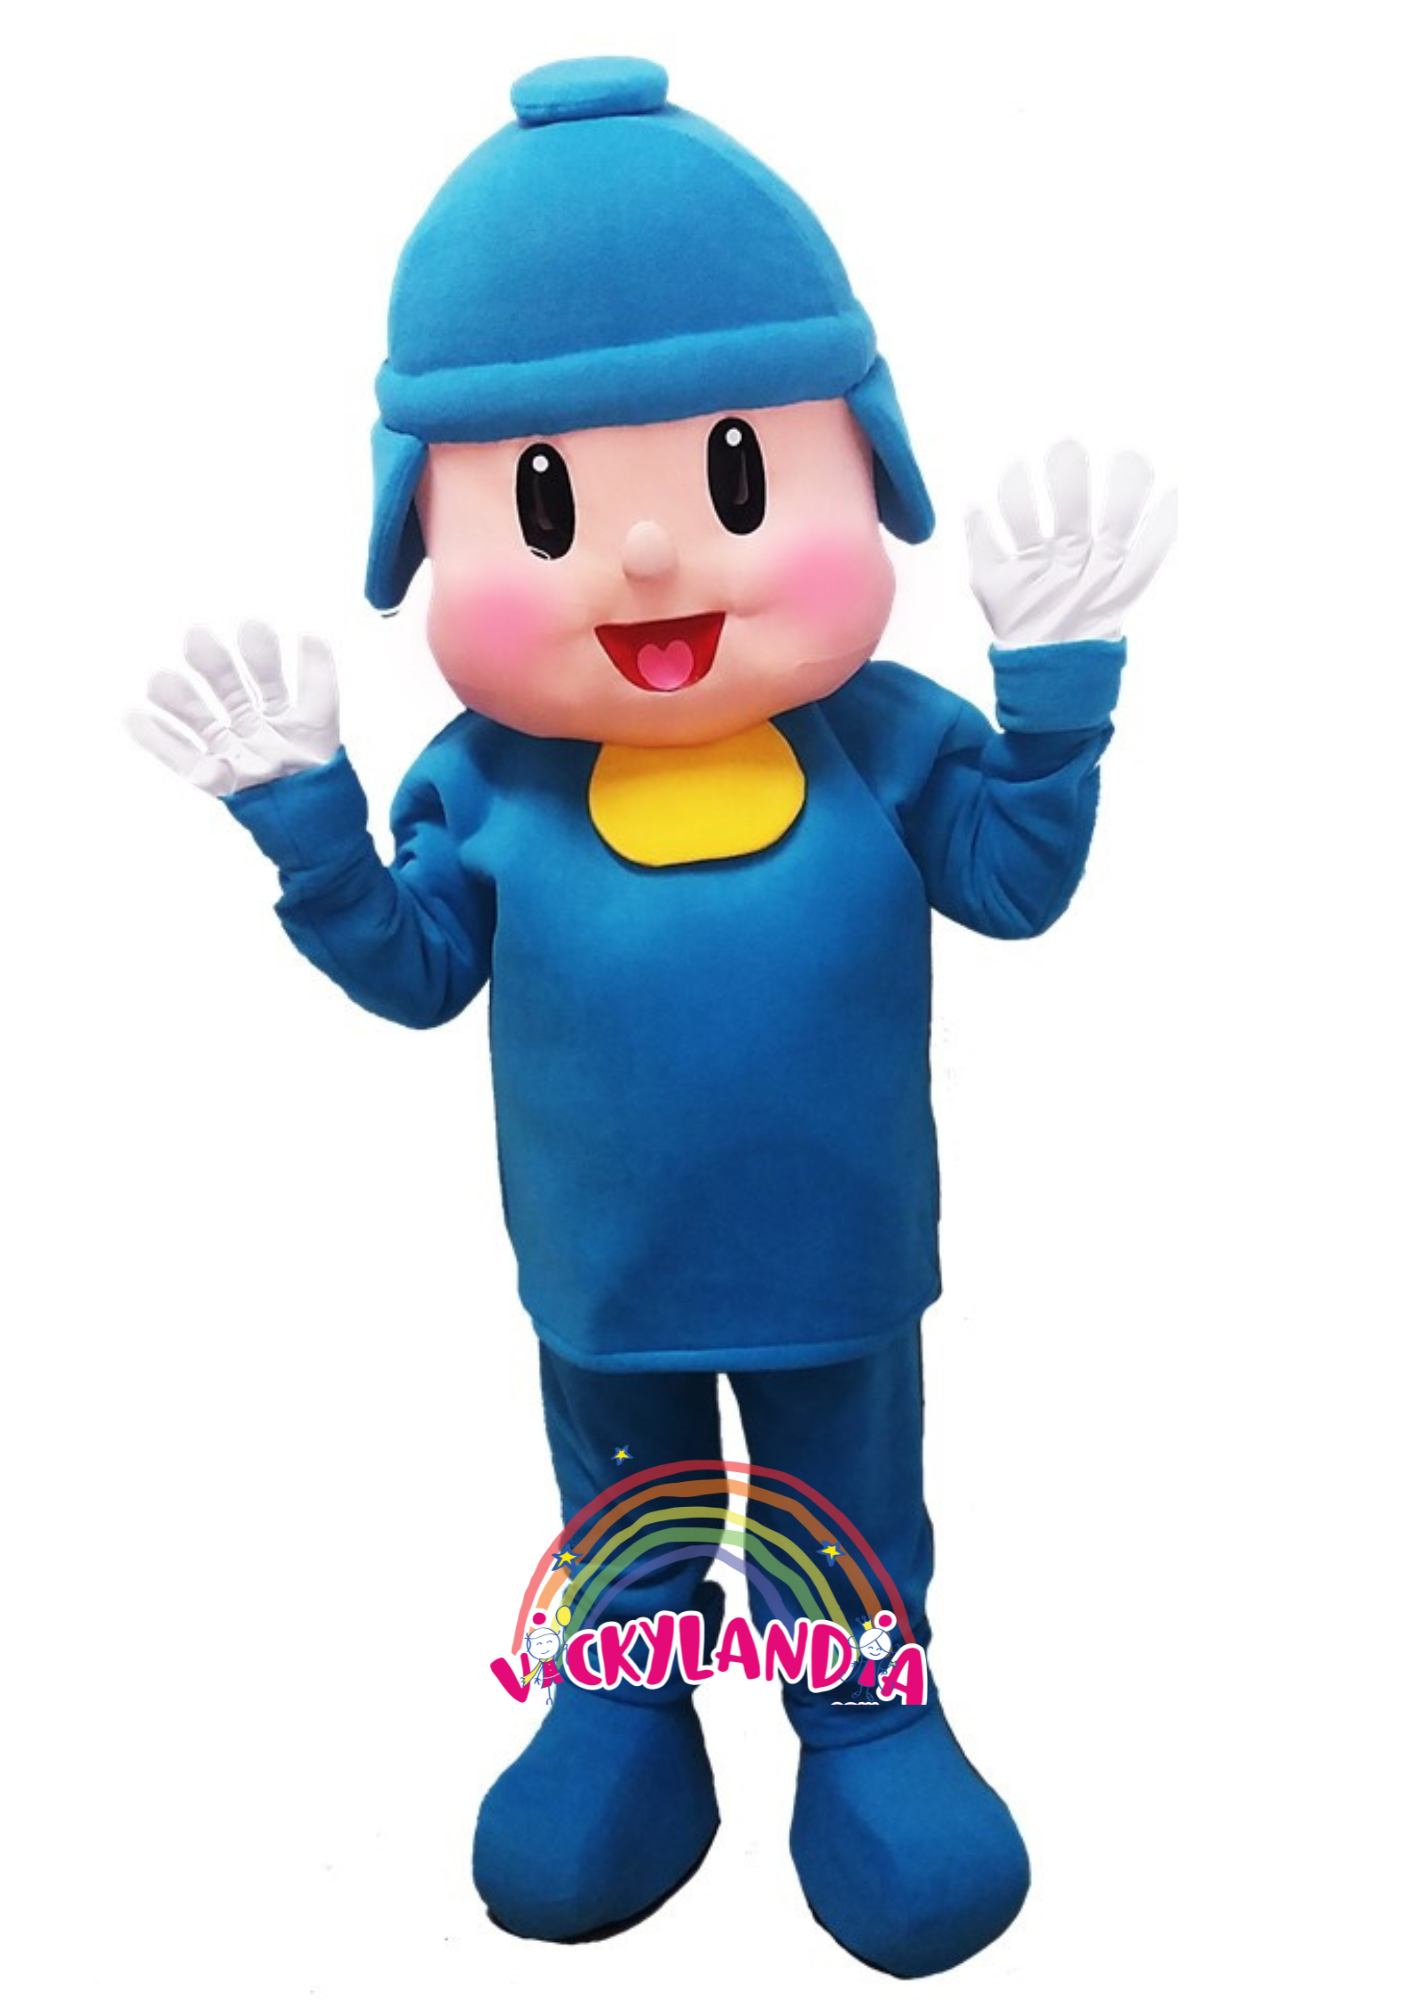 niño traje azul disfraz muñeco cabezon cabezudo botarga mascota publicitaria Peluches personalizados Merchandising corporativos personalizados Fabricante vickylandia